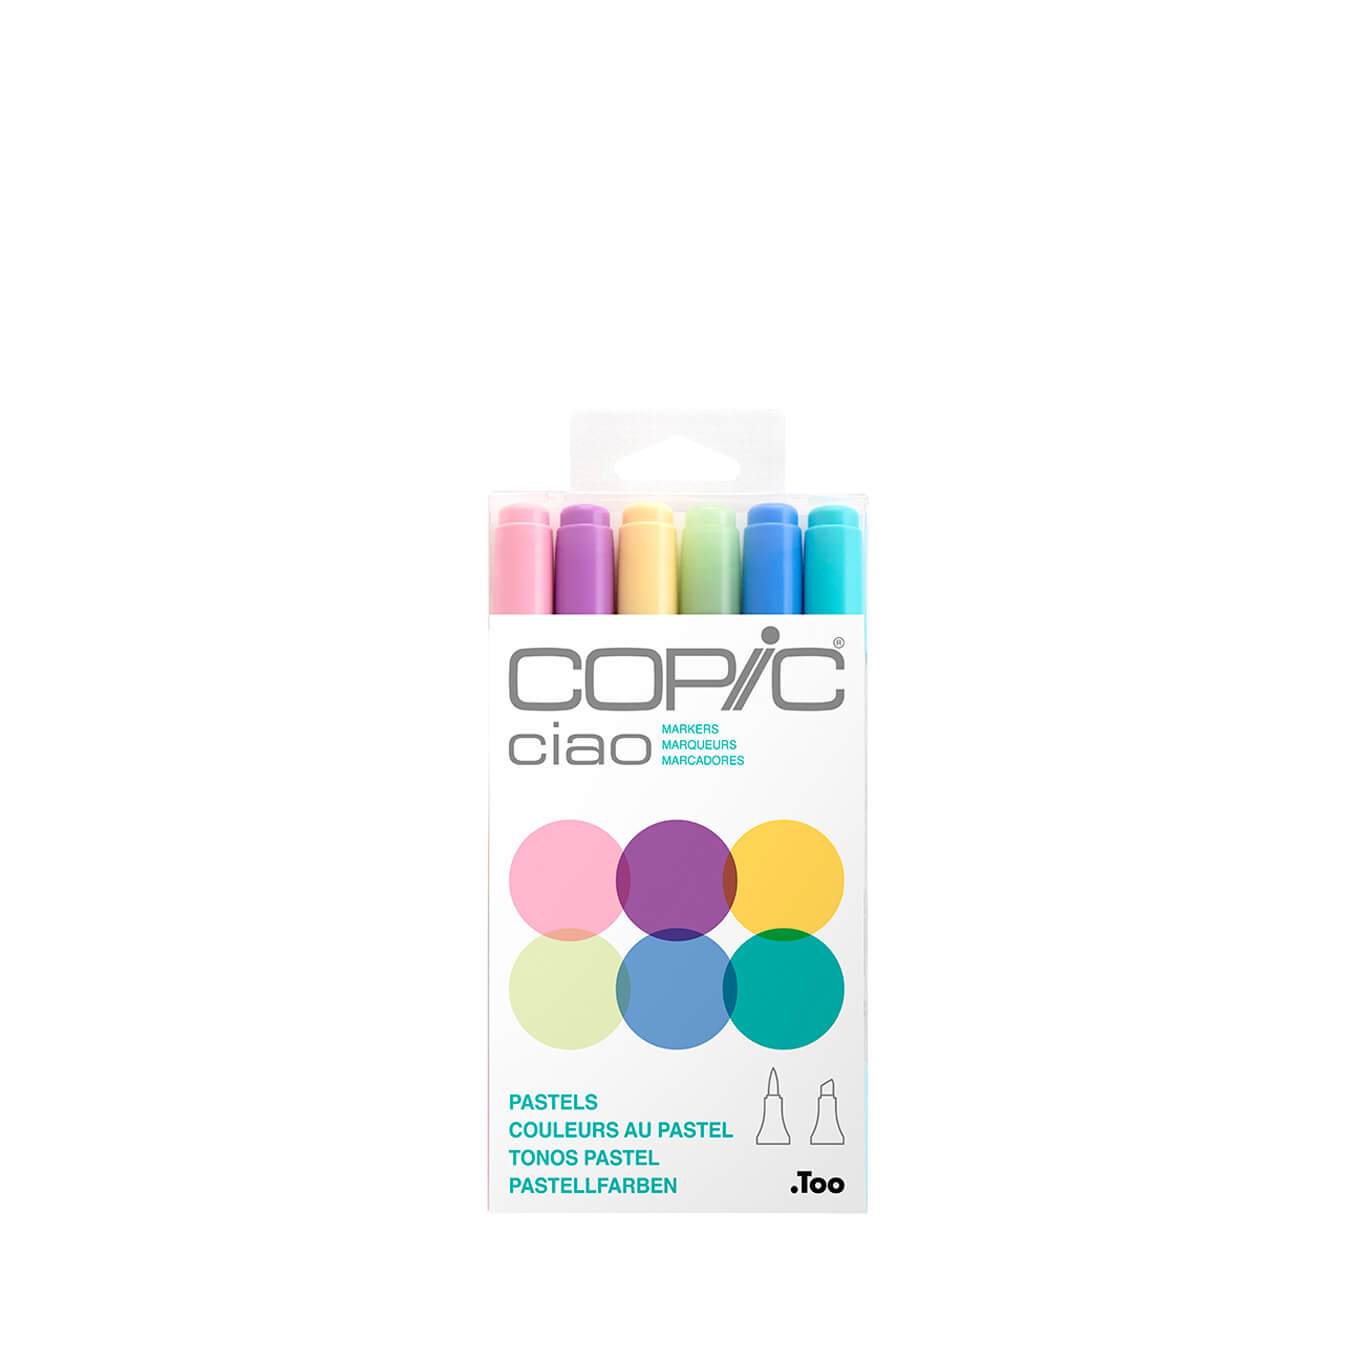 Copic Ciao 6 colors set Pastels